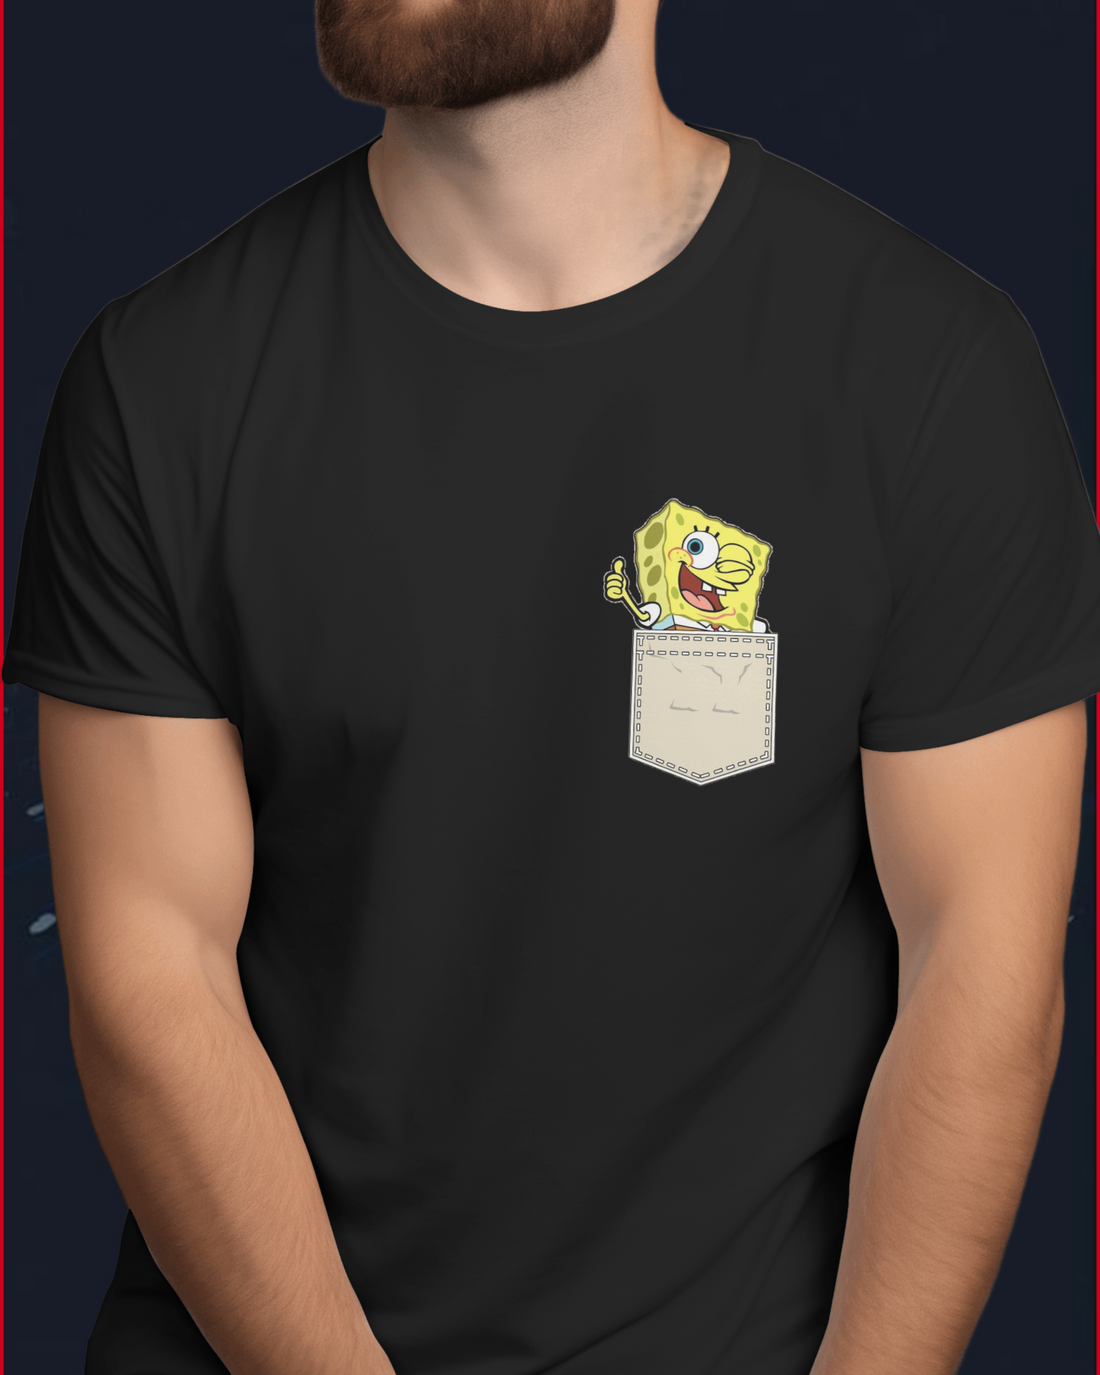 Half Sleeves Pocket Printed T-Shirts (Black)